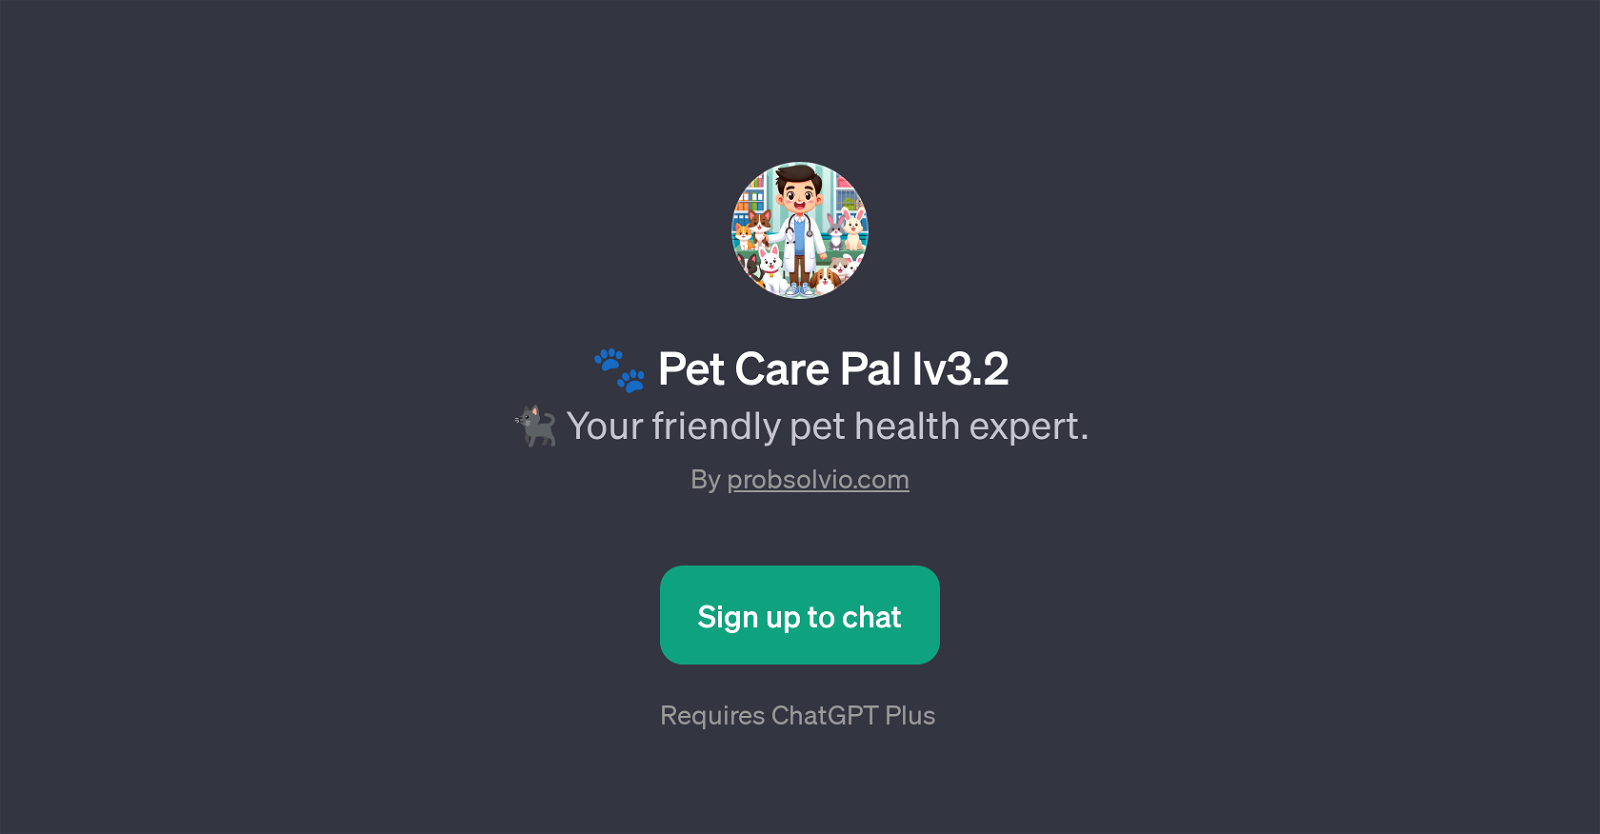 Pet Care Pal lv3.2 website